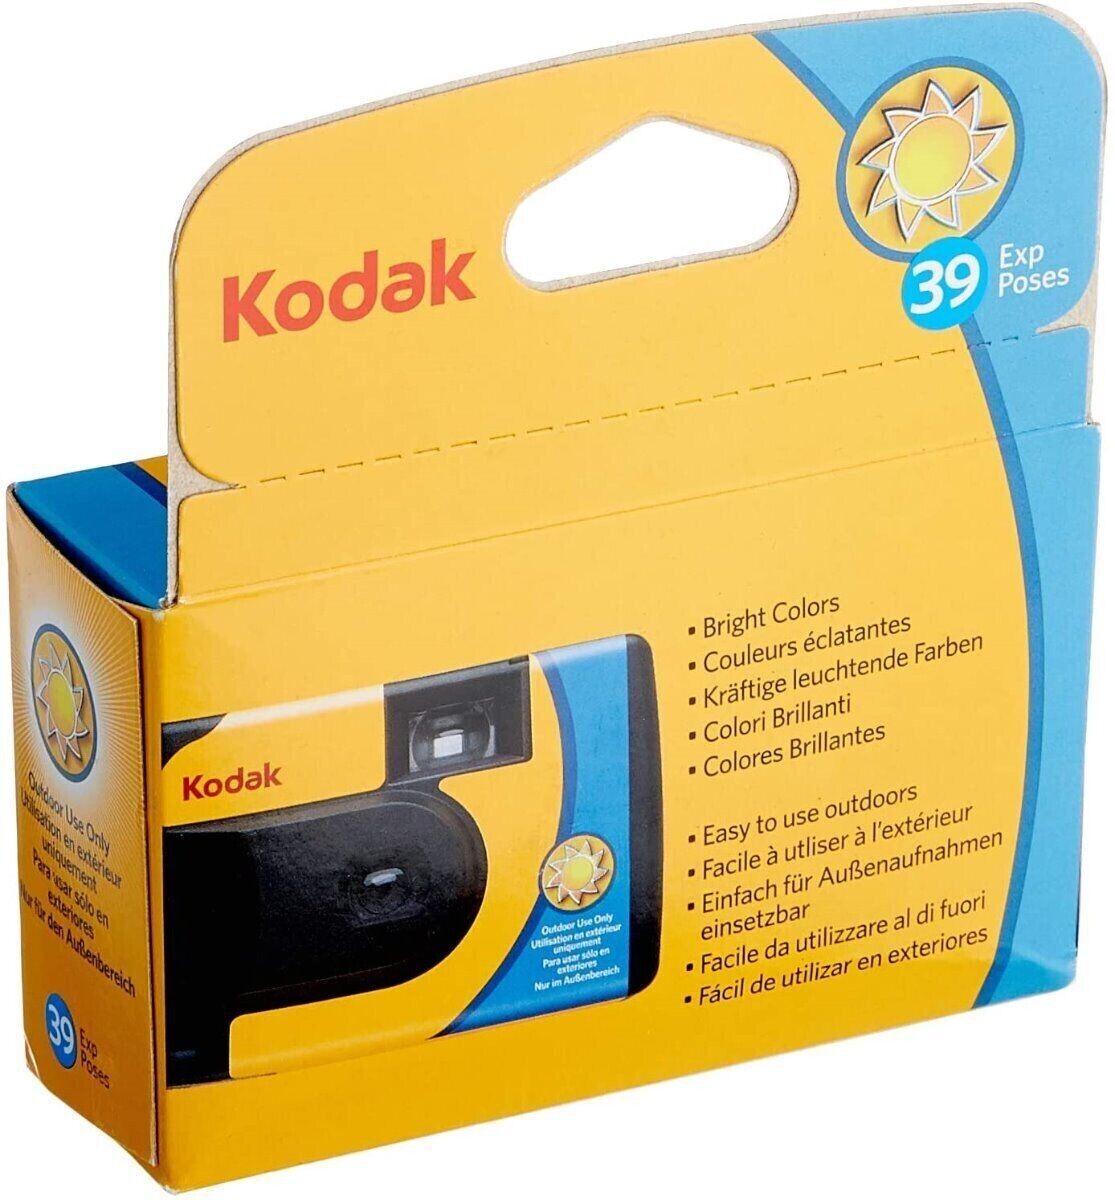 Kodak Daylight Single Use Camera - 39 exposures (2 camera pack)